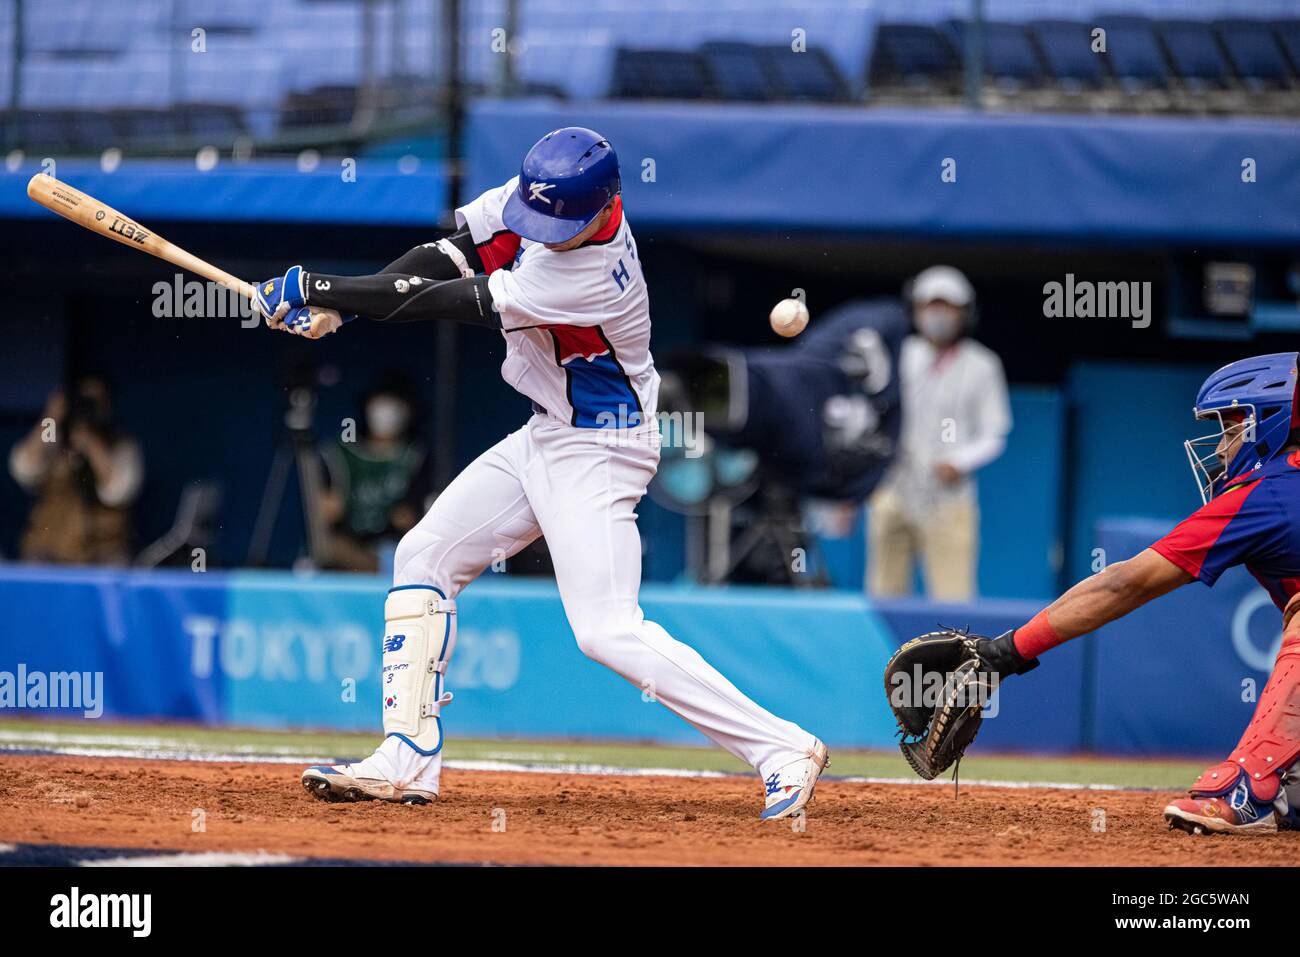 Yokohama, Japan. 7th August 2021. Olympic Games: Bronze medal match between Korea v Dominican Republic at Yokohama Baseball Stadium. © ABEL F. ROS / Alamy Live News Stock Photo